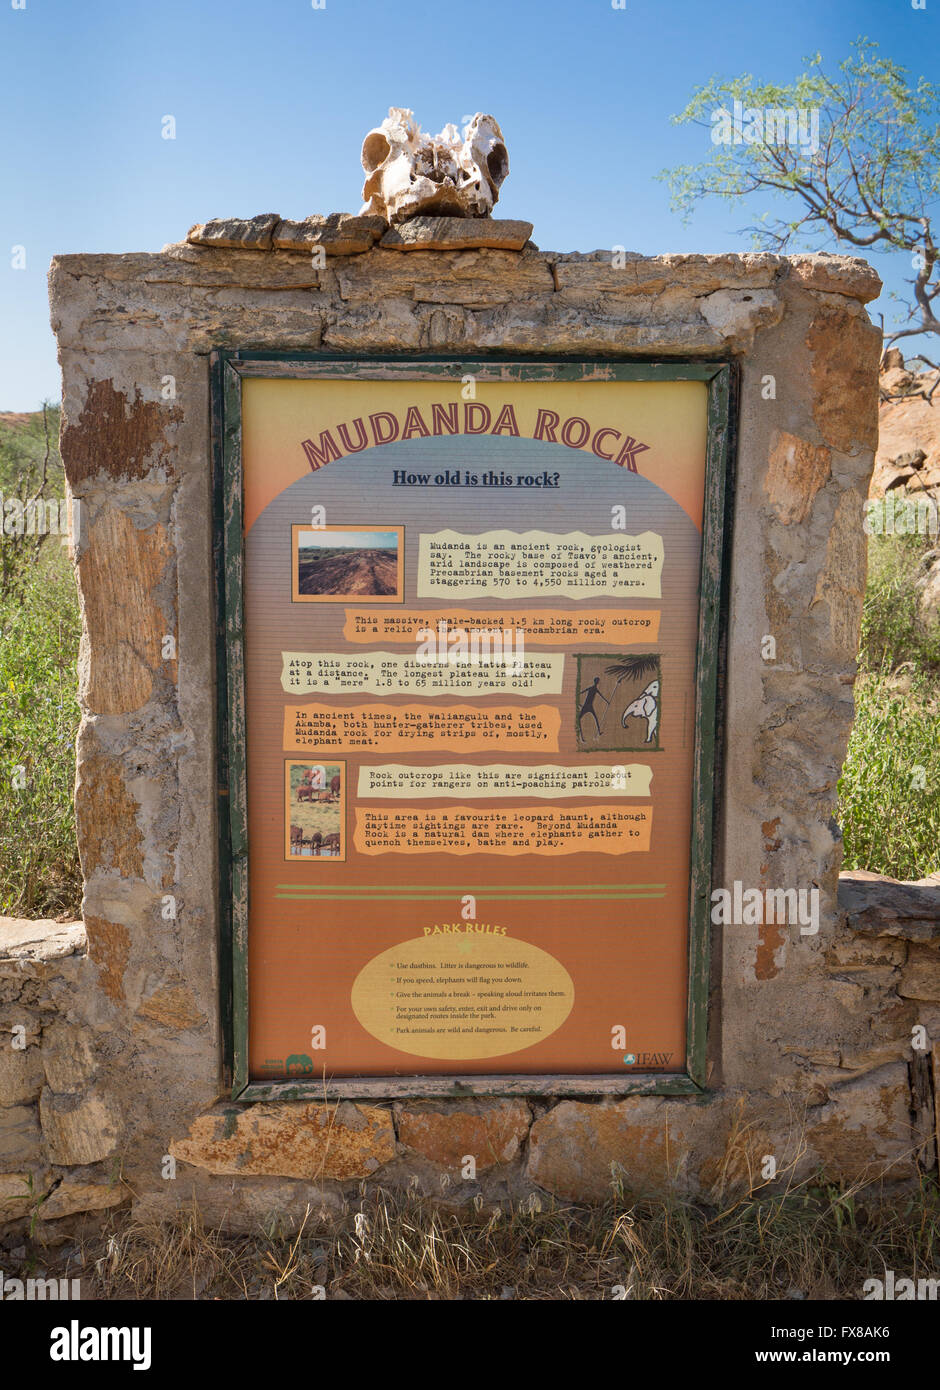 Tourist Information Board Yopped mit einem Totenkopf im Mudanda Rock - ein Präkambrium Felsvorsprung in Tsavo East Nationalpark Kenia Stockfoto